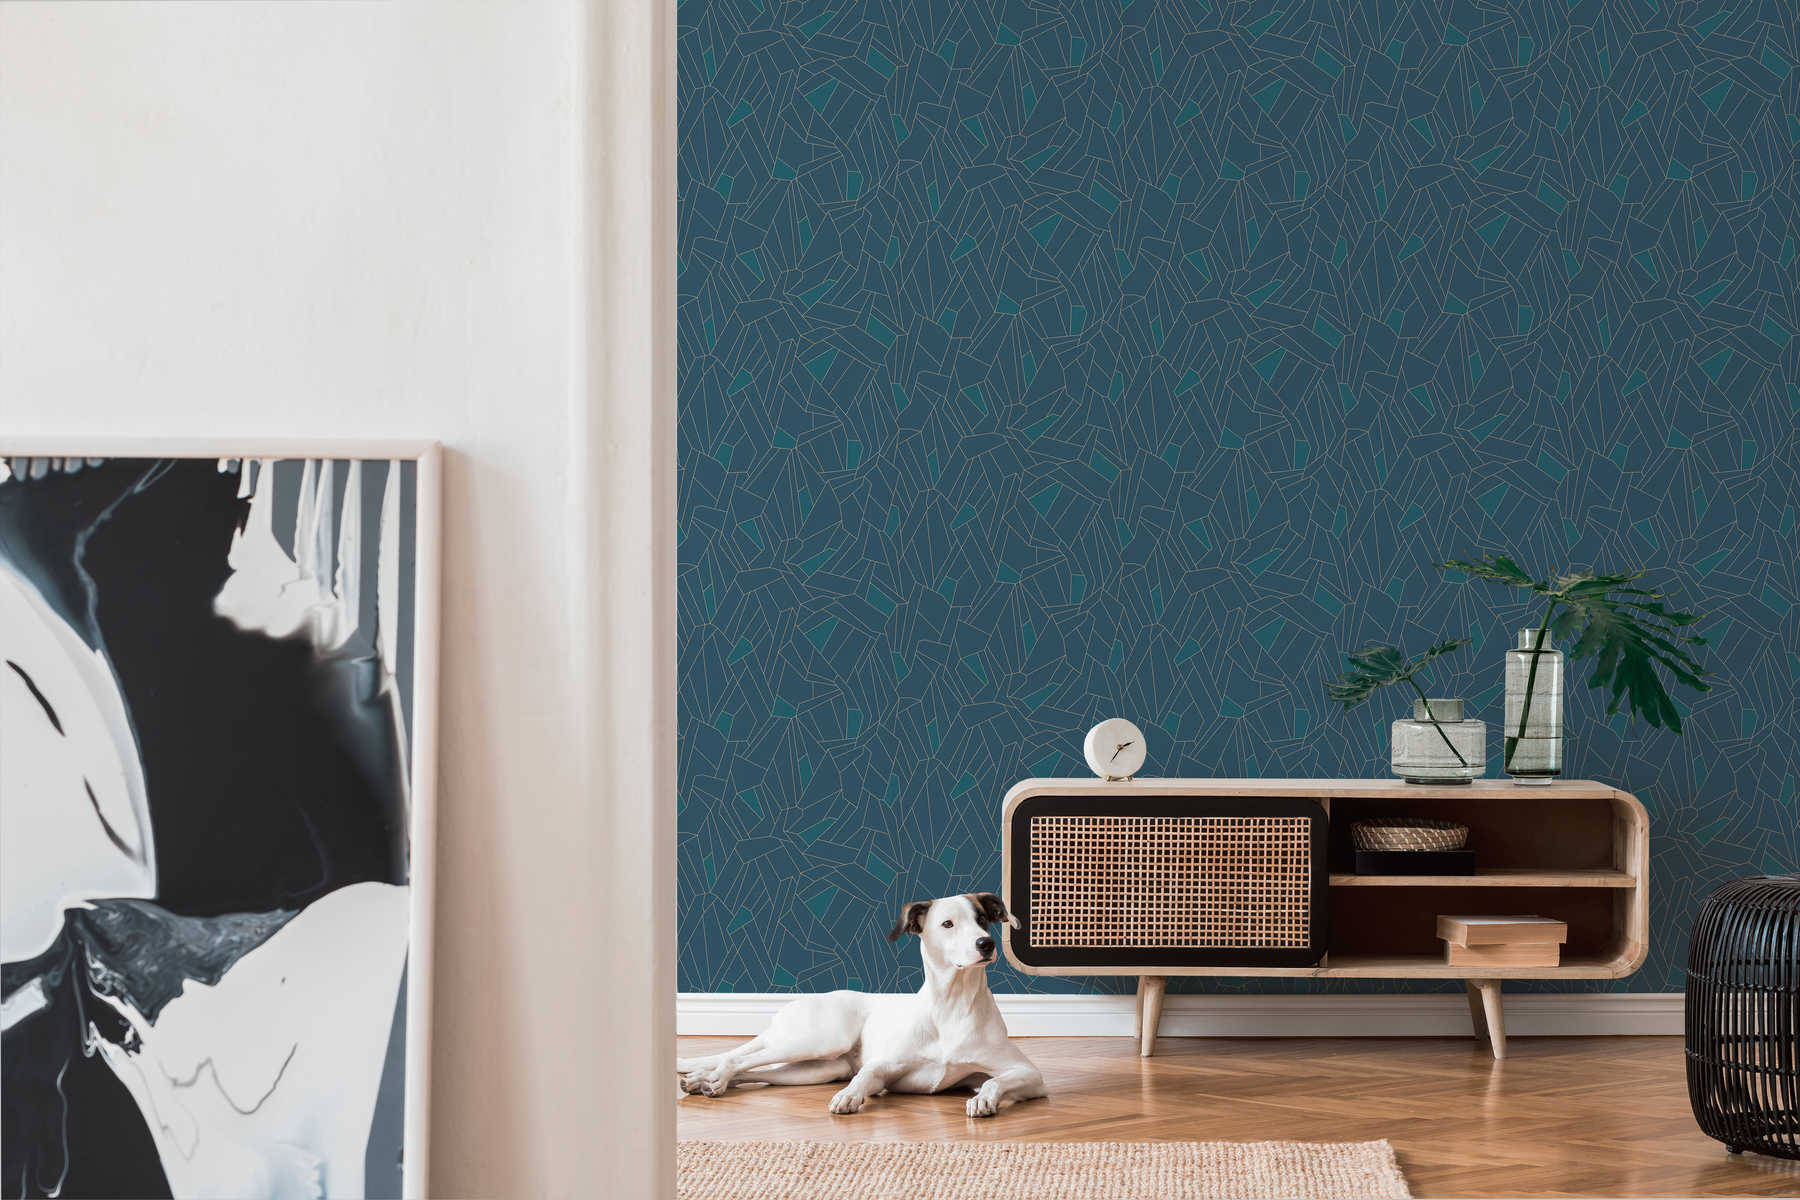             Retro non-woven wallpaper with glitter effect - blue, petrol, beige
        